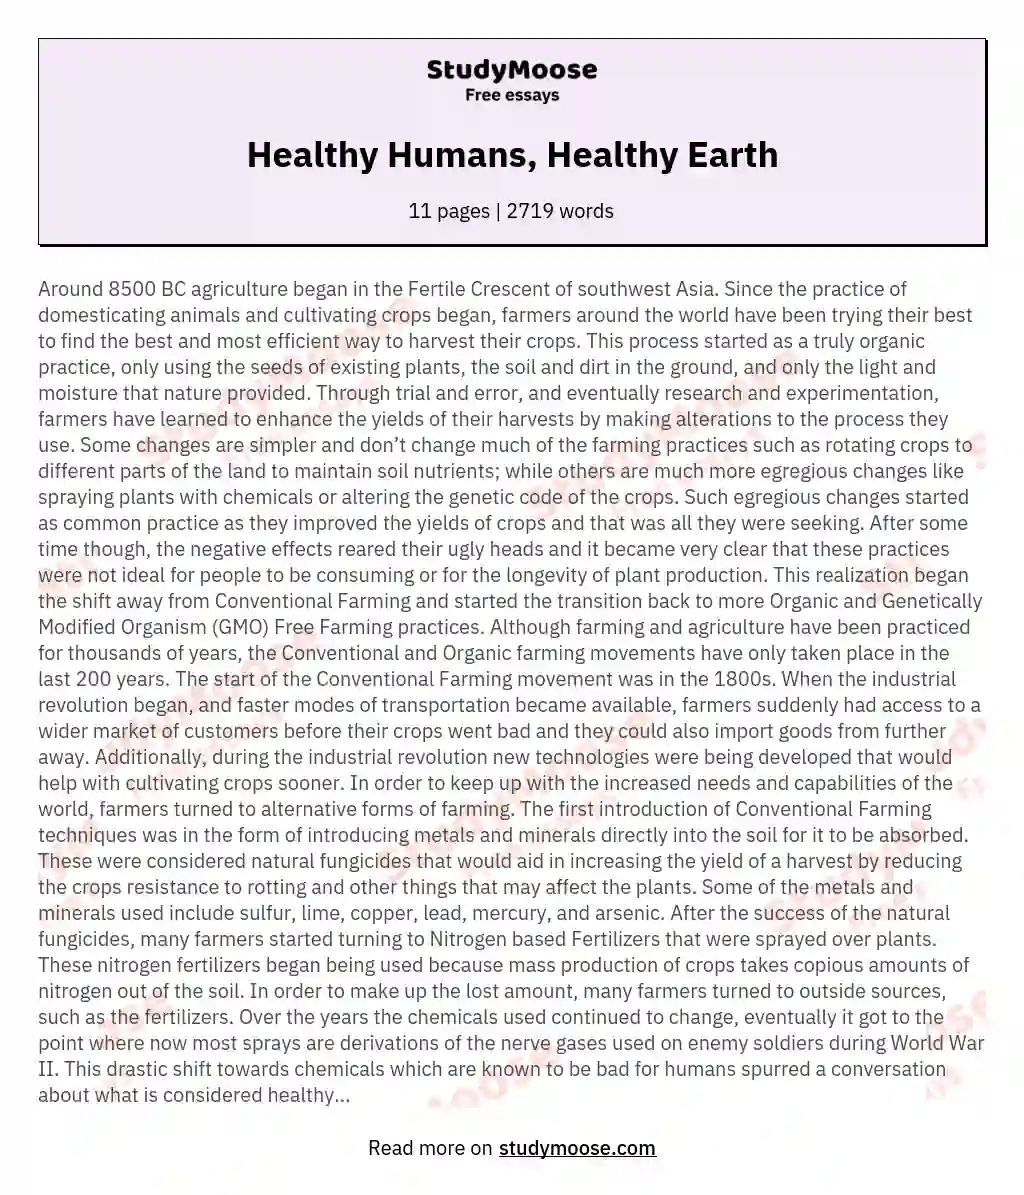 Healthy Humans, Healthy Earth essay